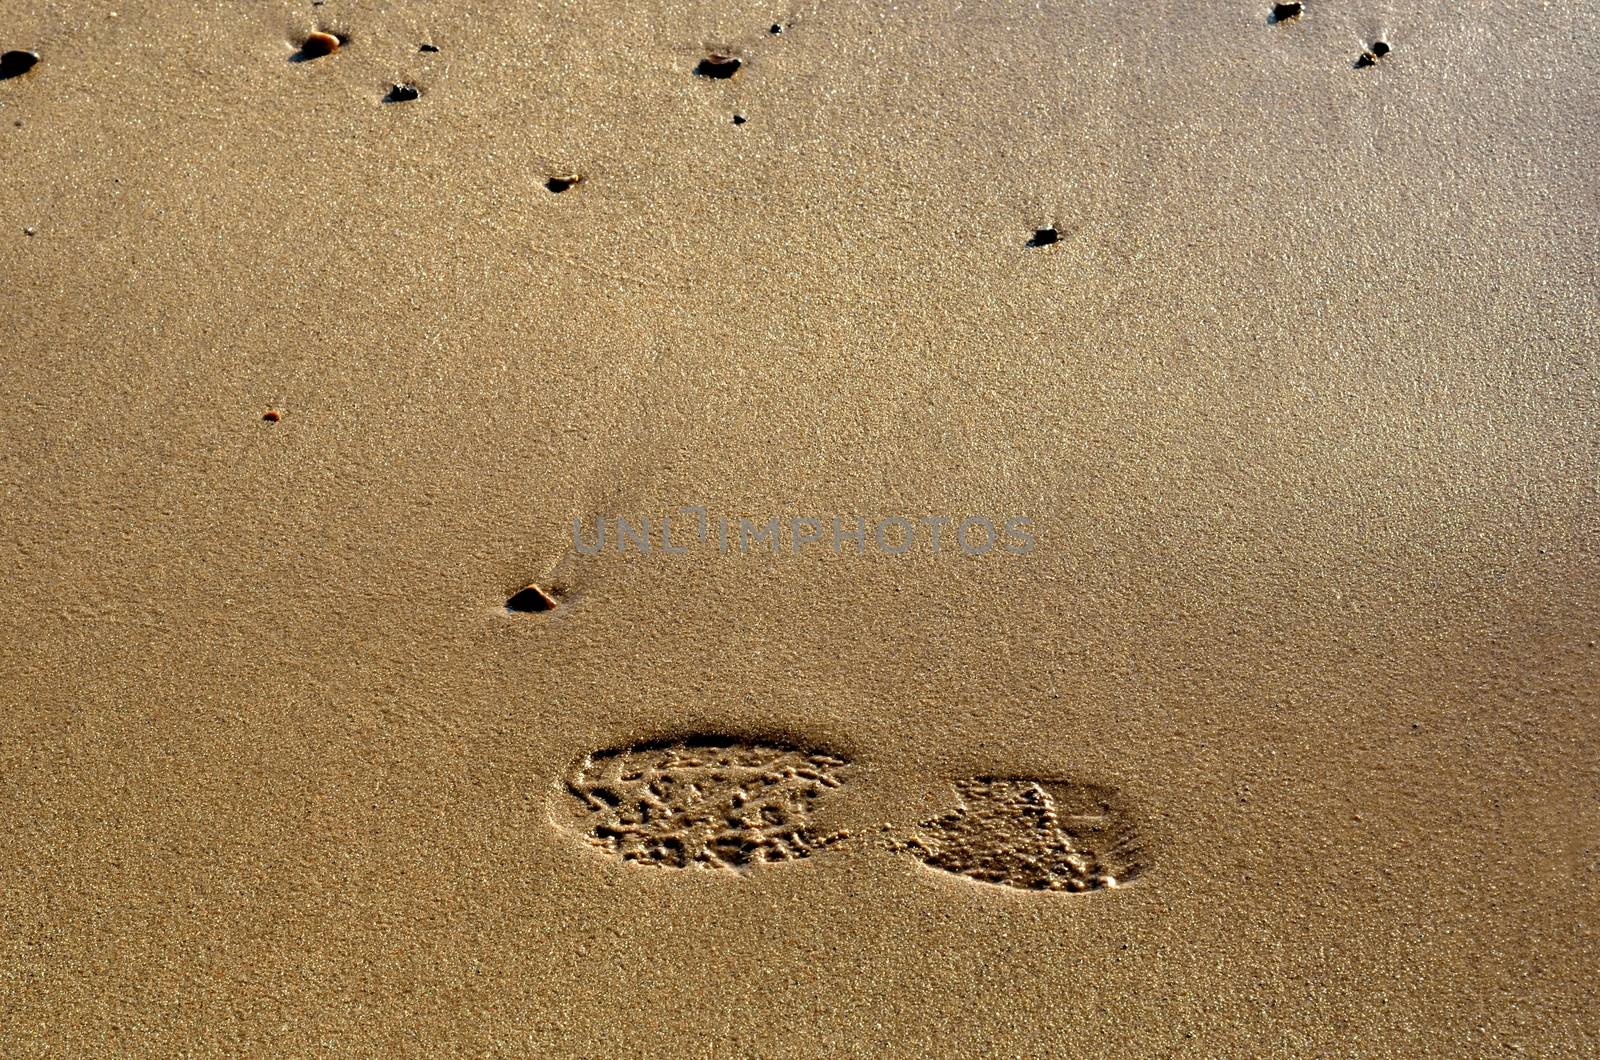 footprint in wet sand by pauws99